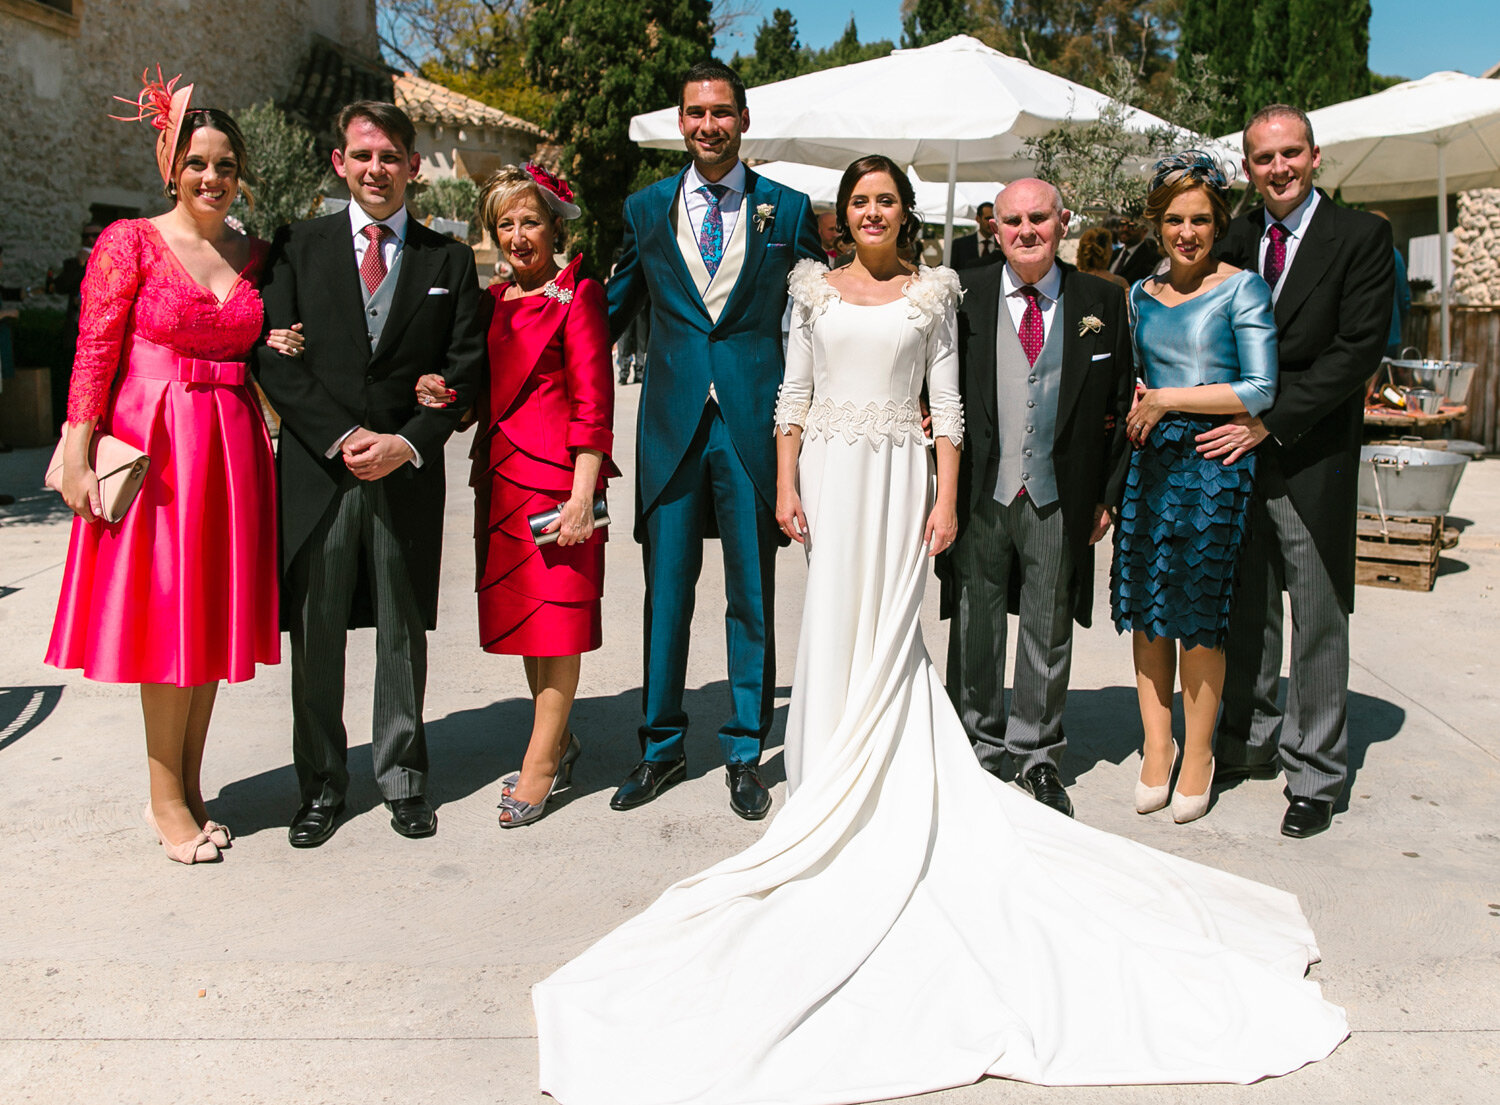 138-vilayvidal-fotografia-bodas-gandia-valencia-alicante-boda-elia-fernando_mas_dalzedo.jpg